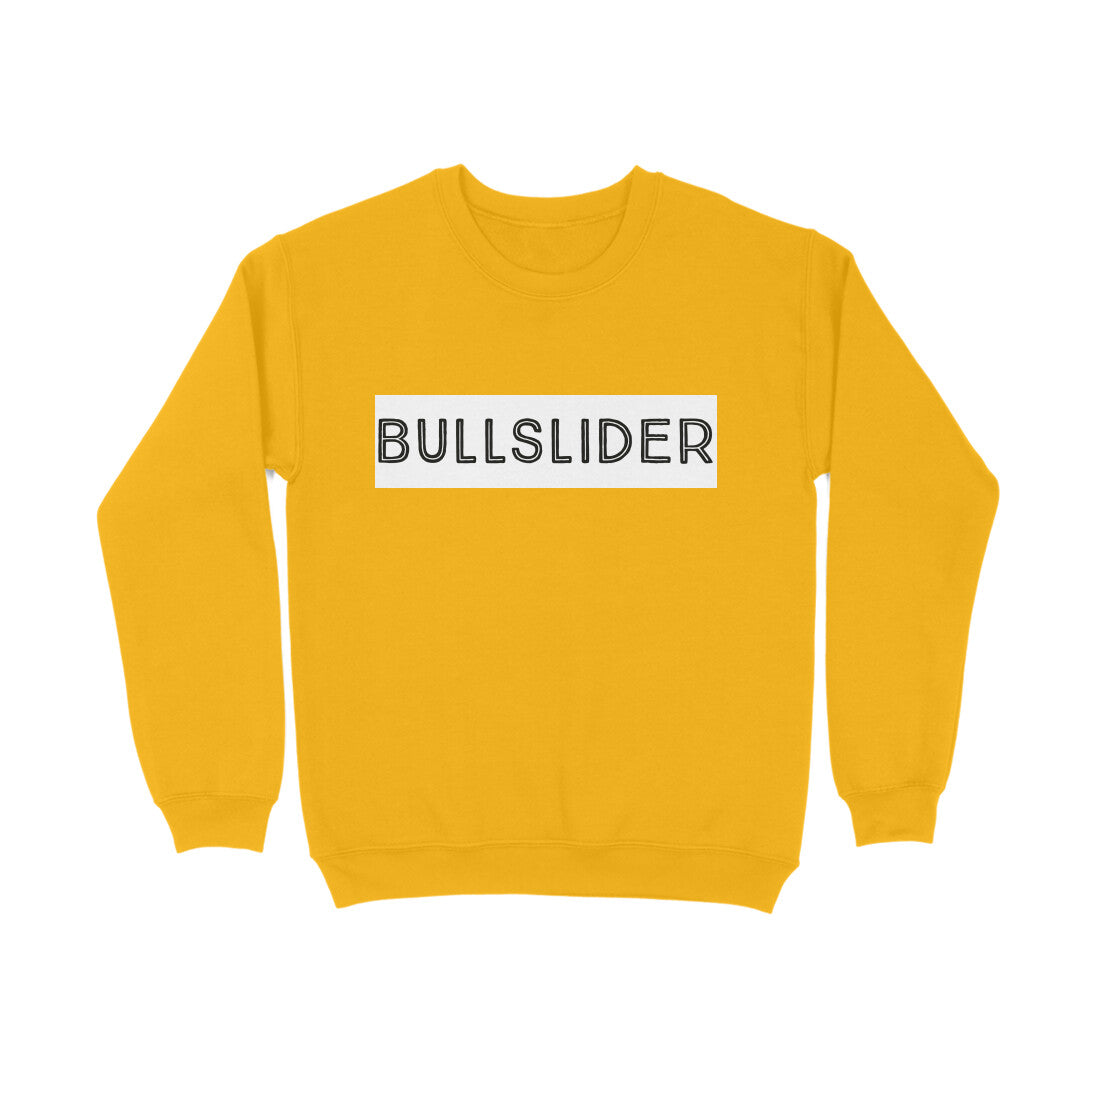 Men's printed BULLSLIDER sweatshirt